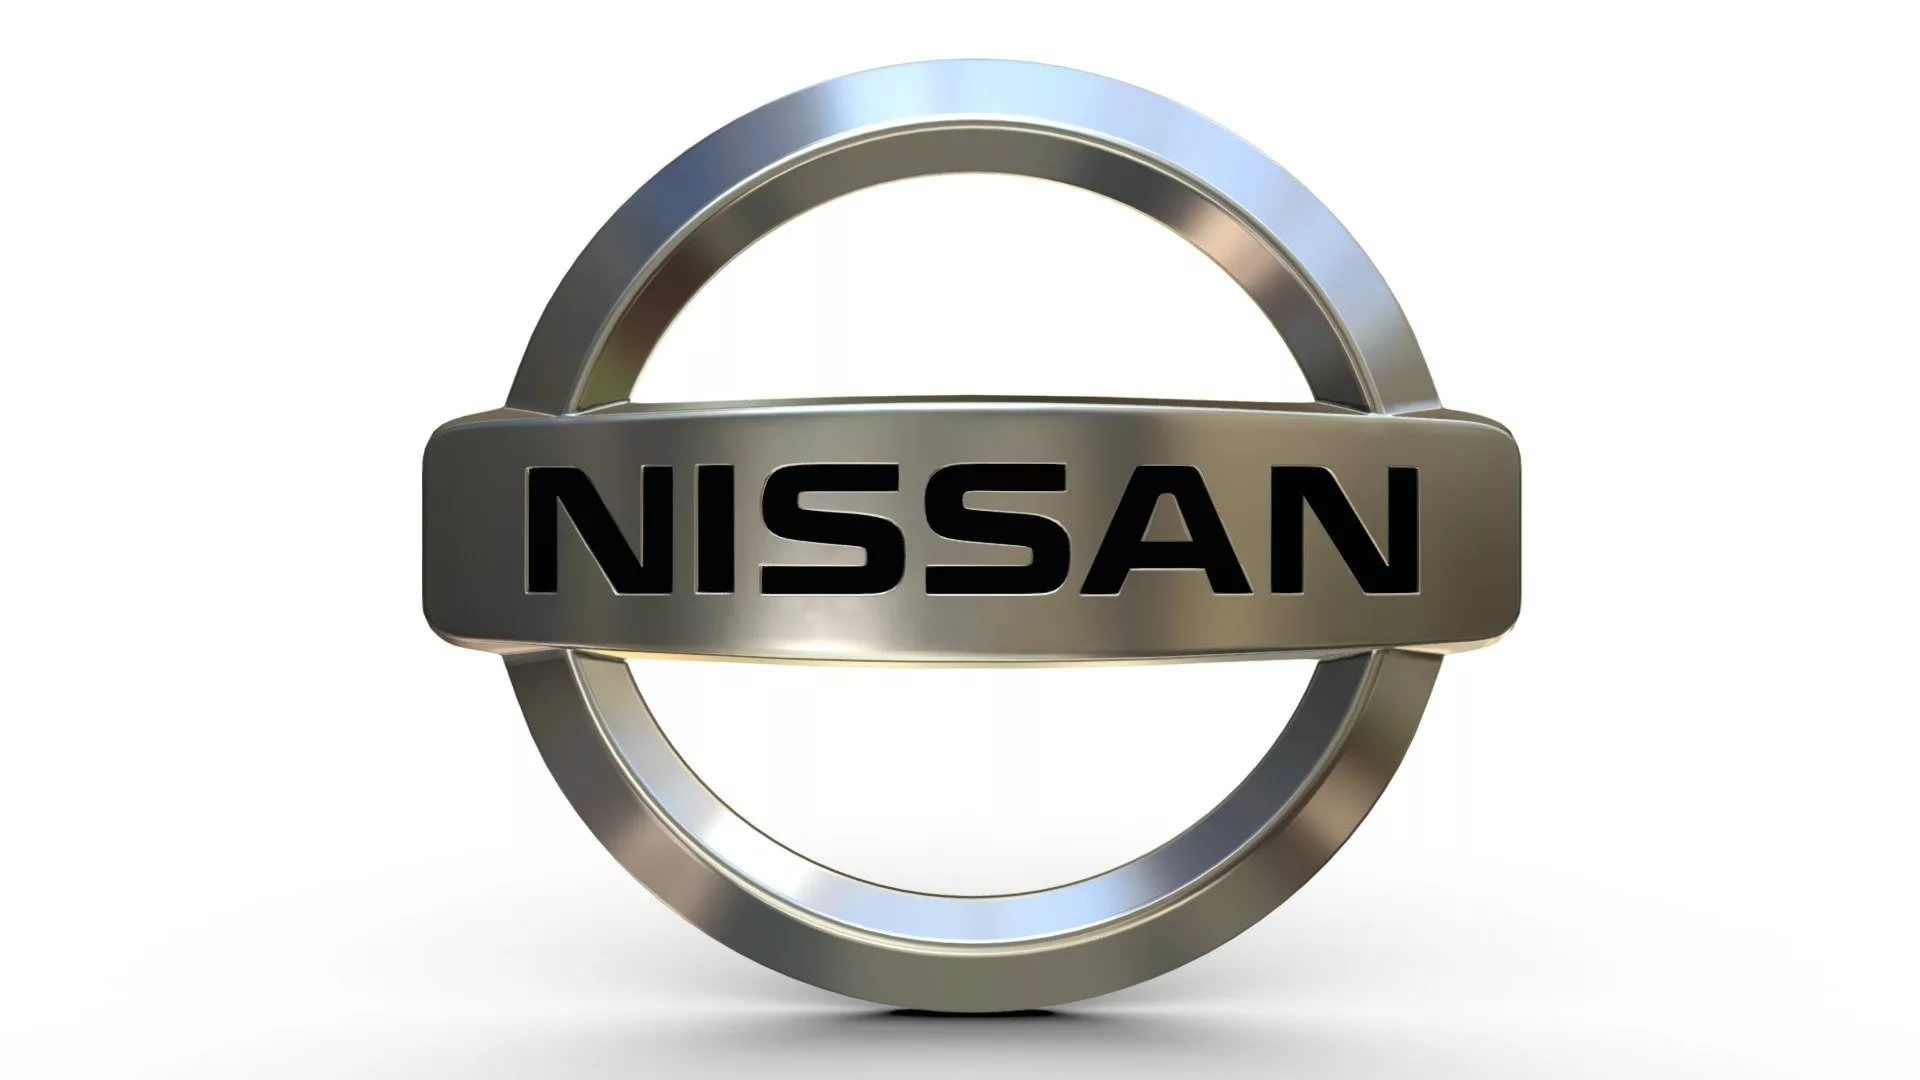 Магазины Запчастей Nissan